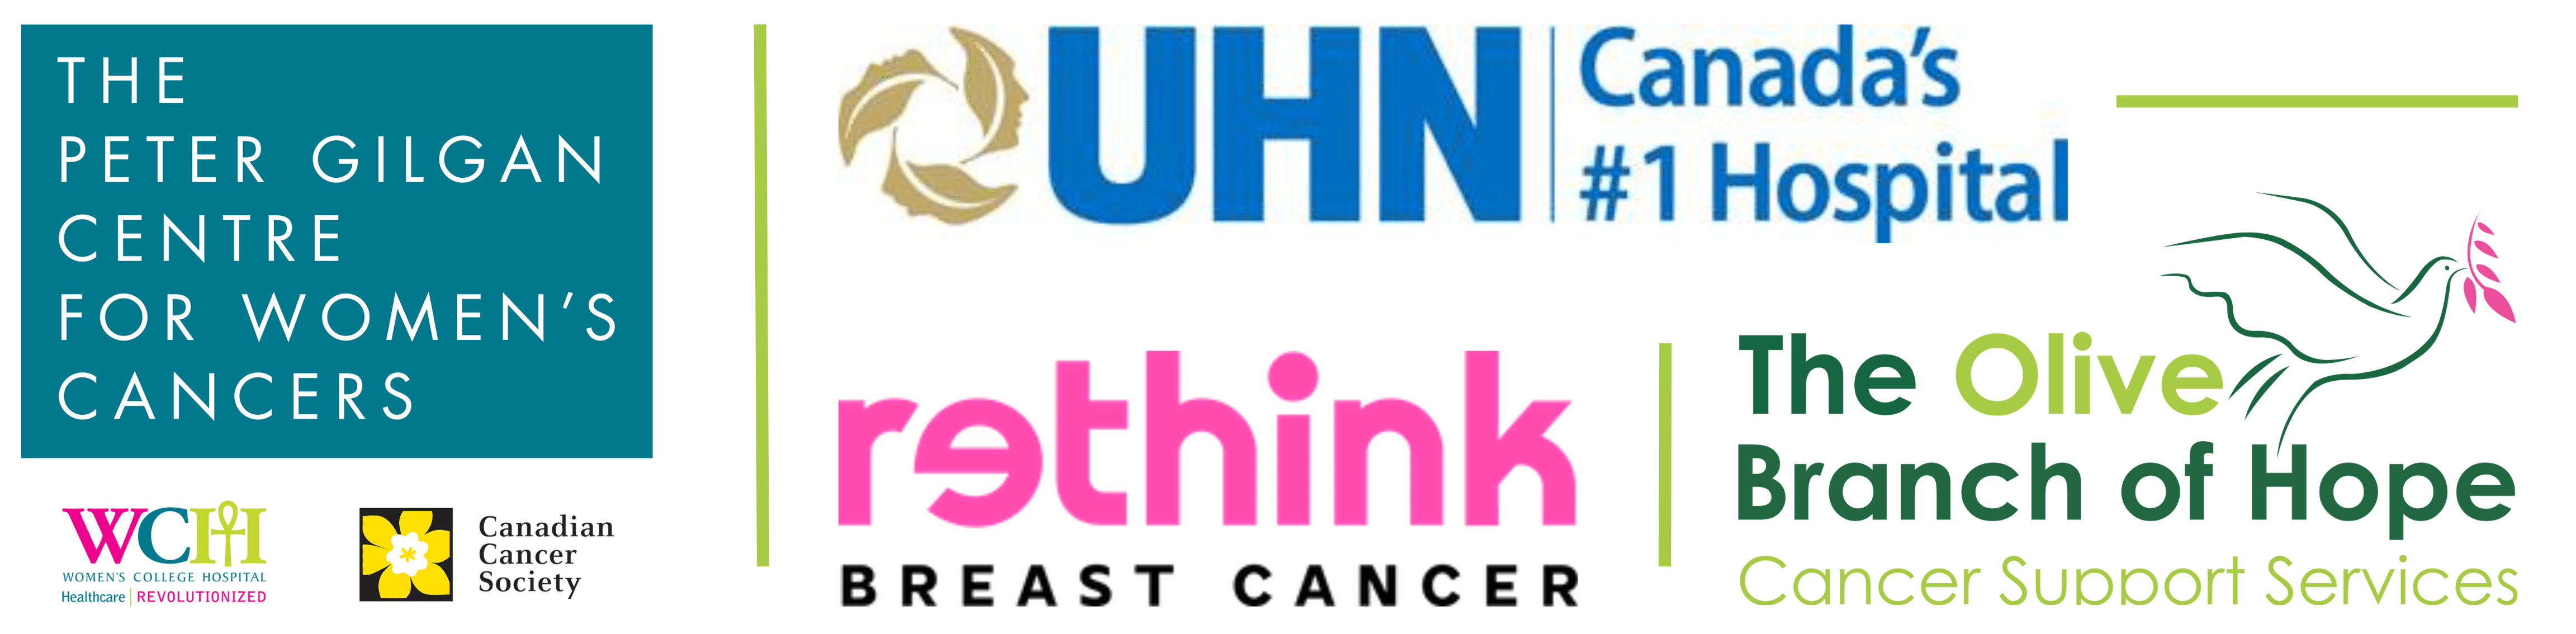 Les logos du Peter Gilgan Centre for Women’s Cancers, Women’s College Hospital, société canadienne du cancer, Universal Health Network, Olive Branch of Hope et ReThink Breast Cancer.